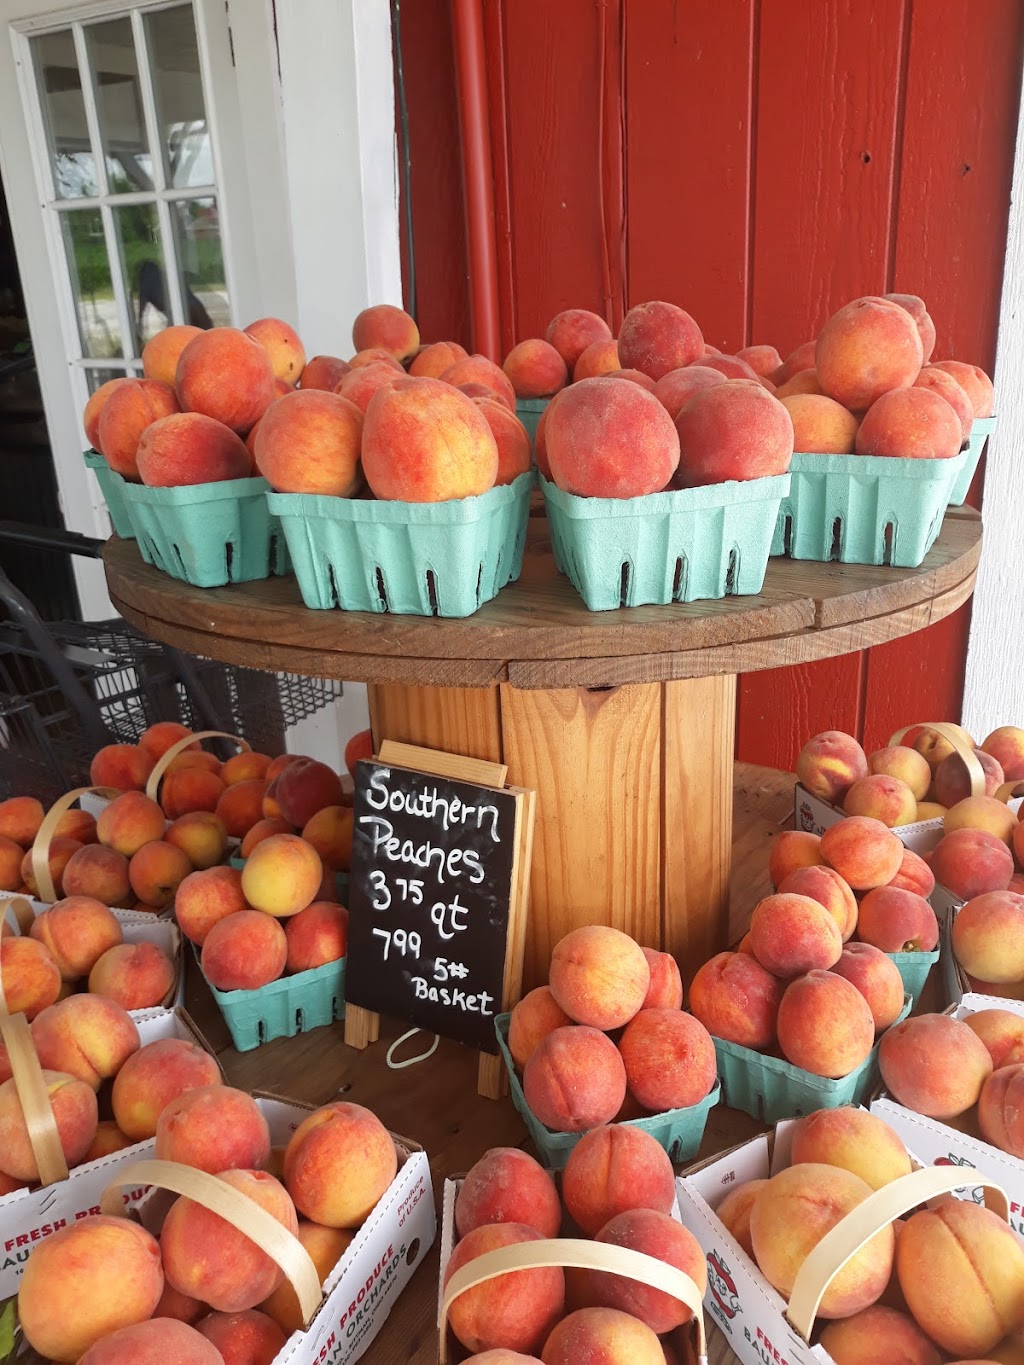 Bauman Orchards Corner Market | 10370 Akron Rd, Rittman, OH 44270, USA | Phone: (330) 855-1029